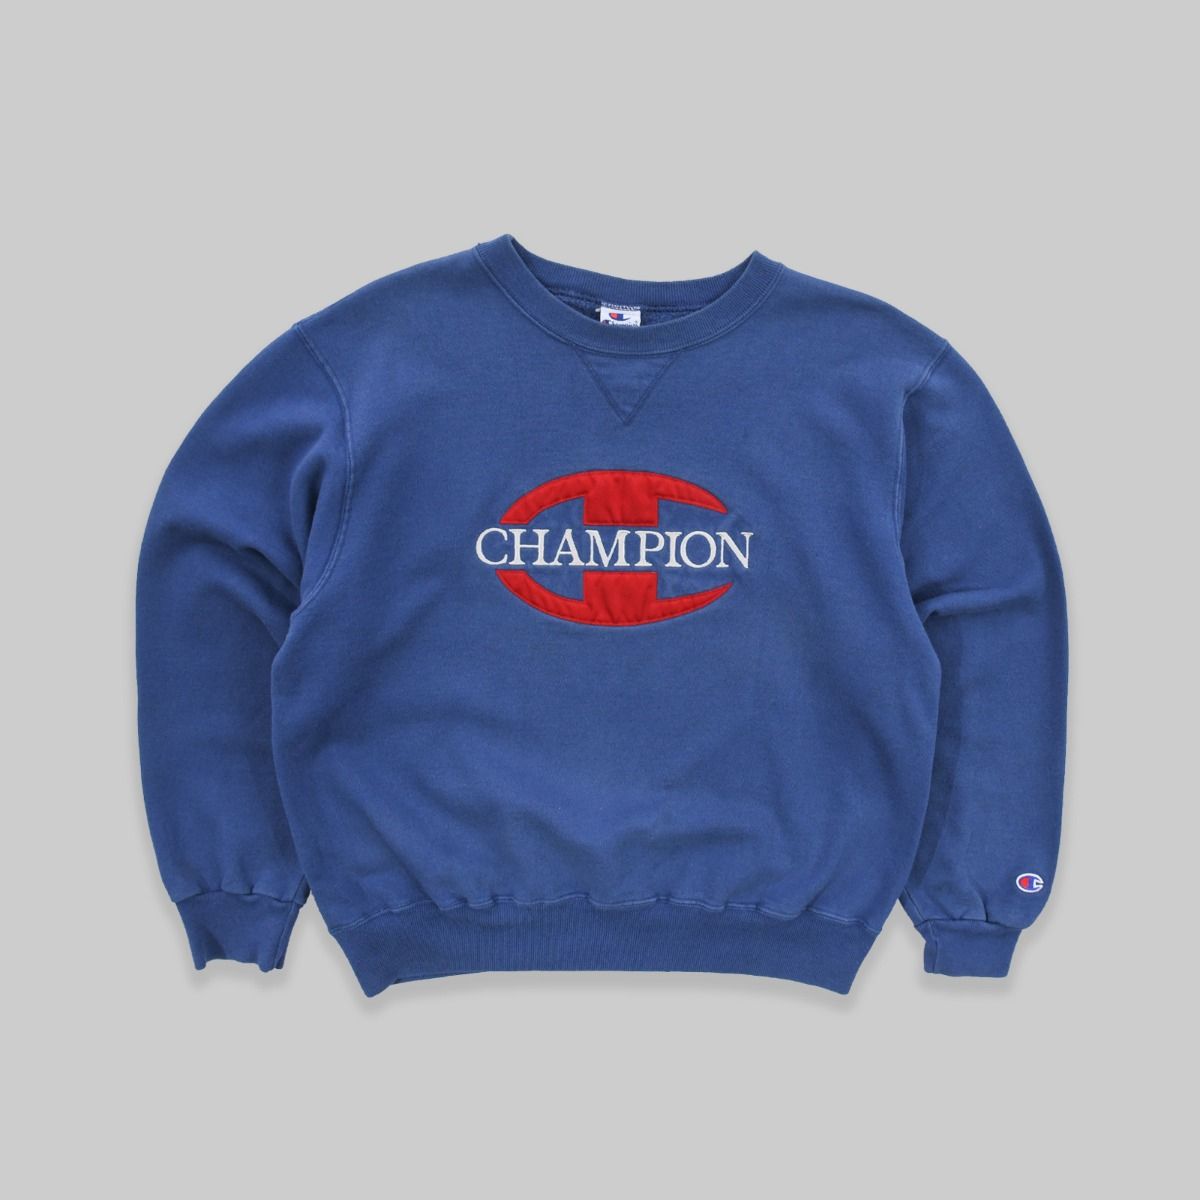 Champion 1990s Sweatshirt